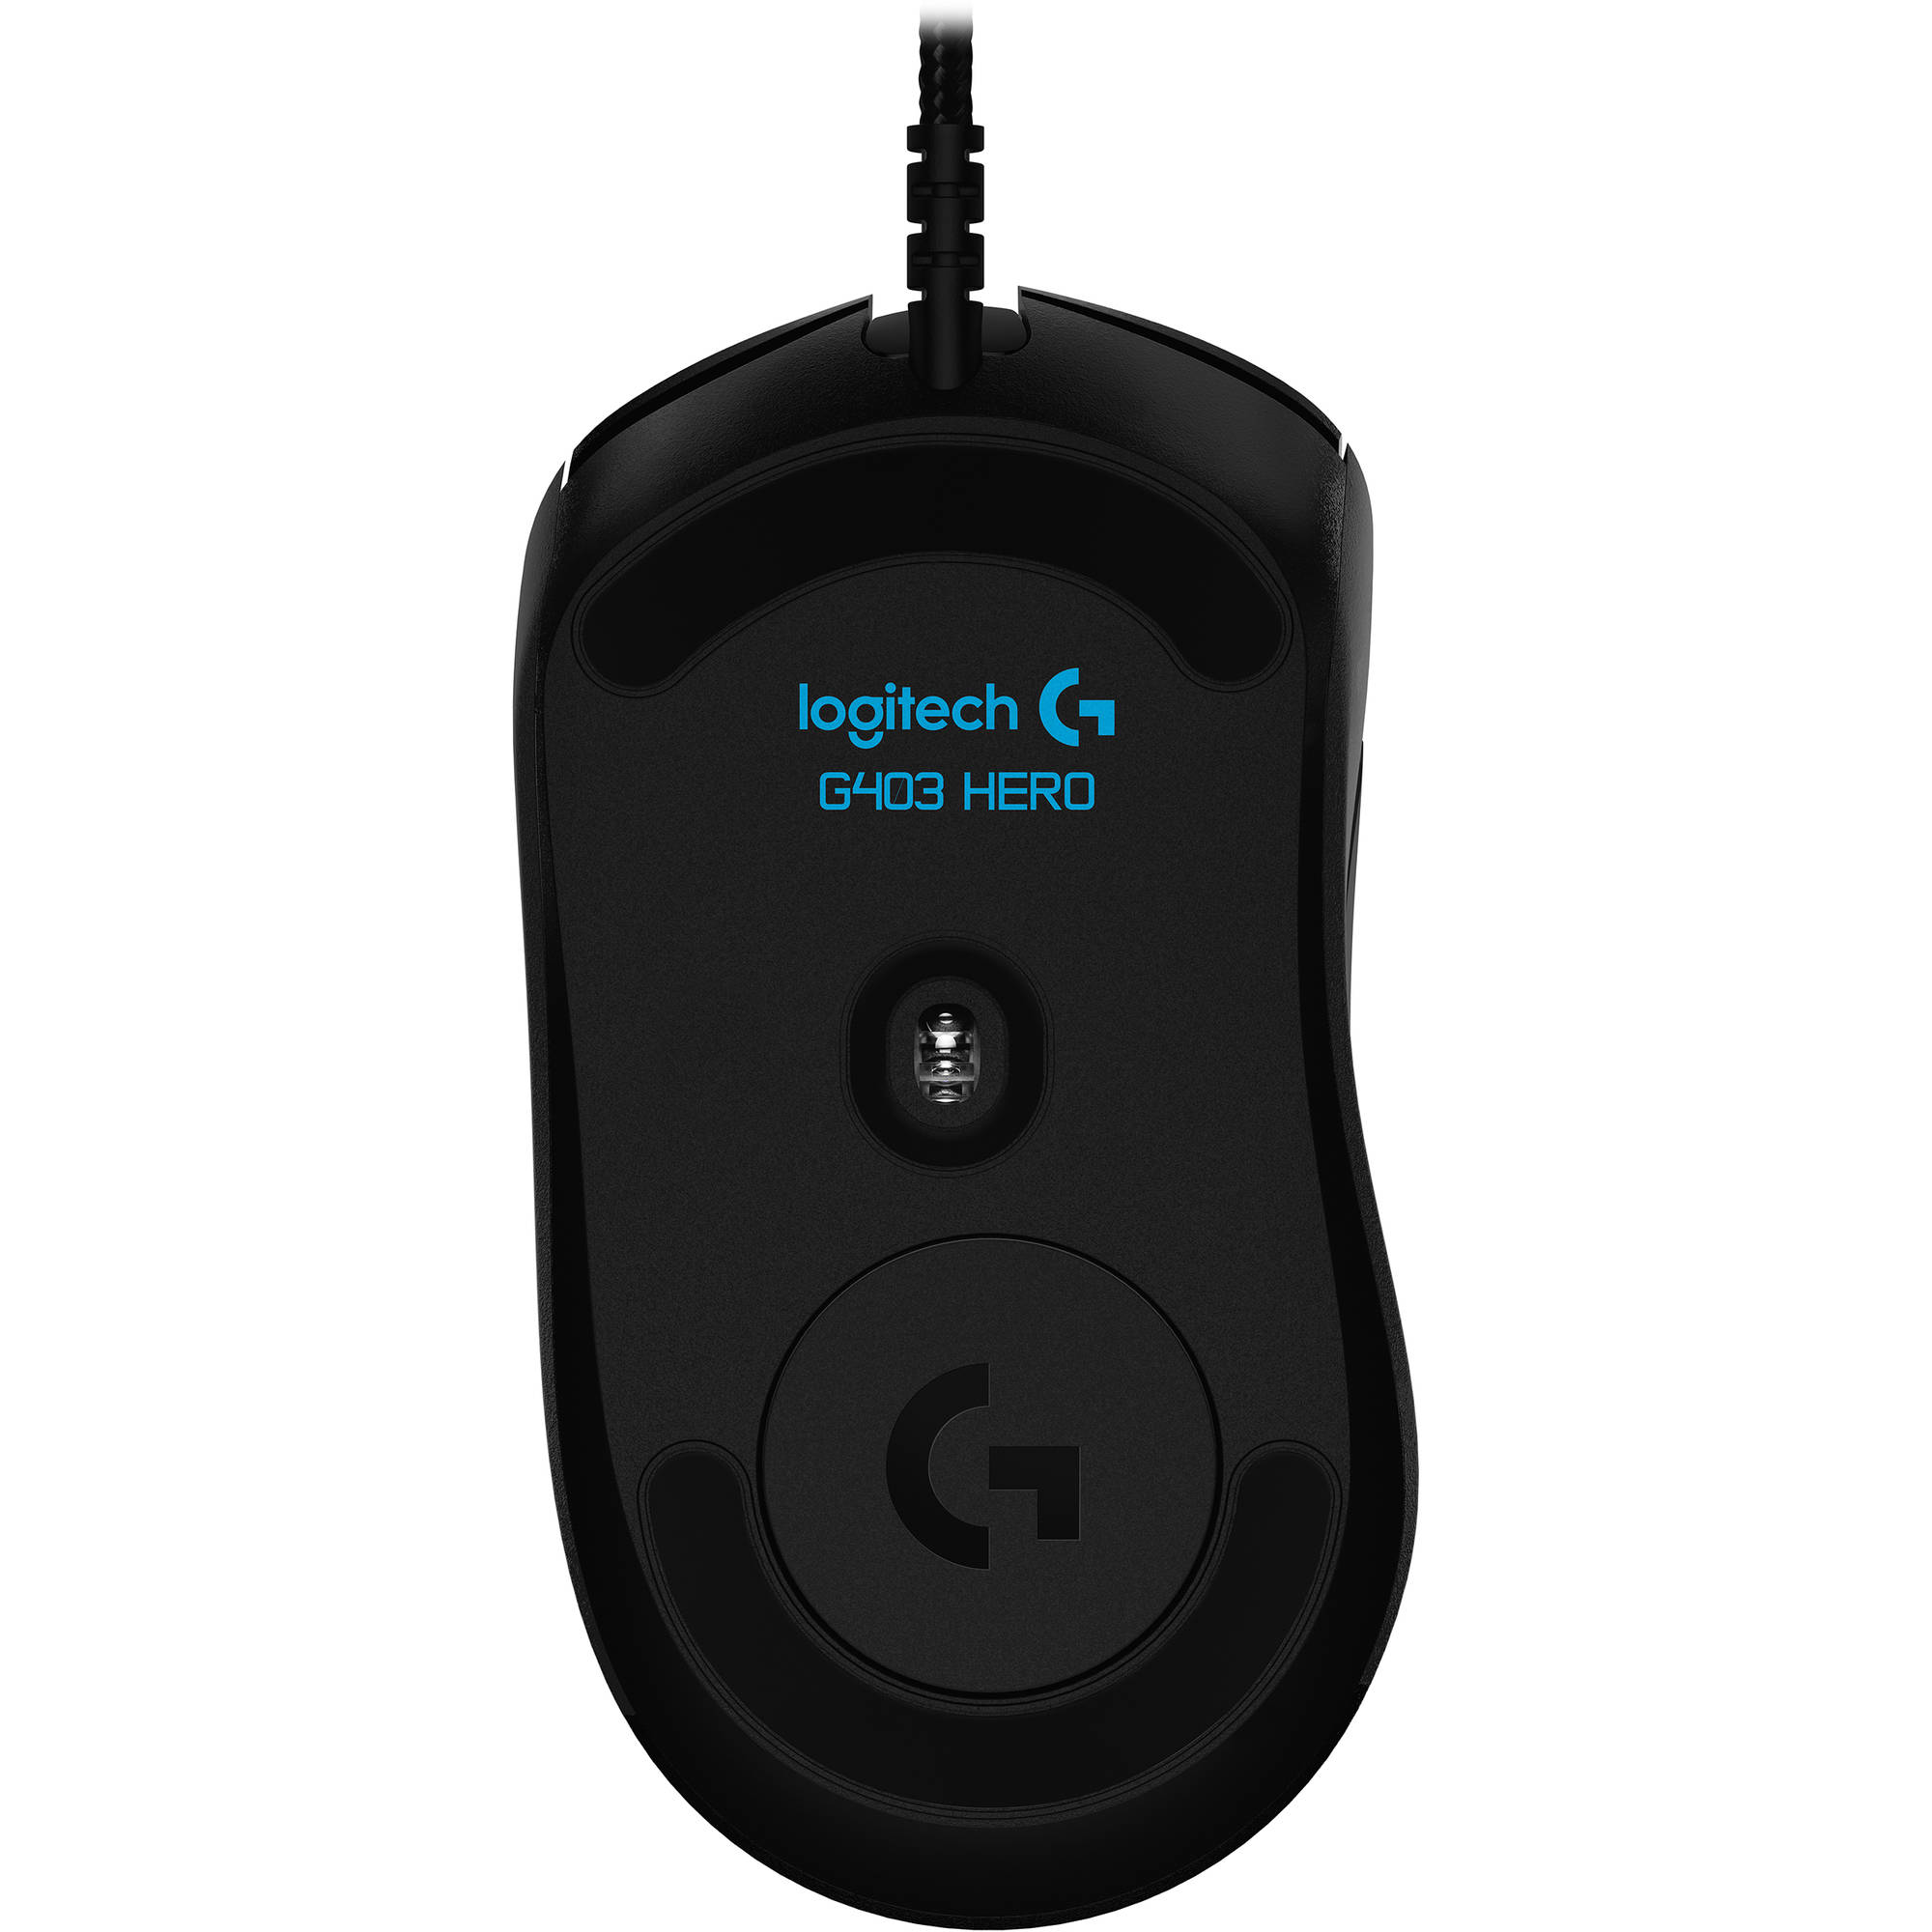 Logitech G G403 Hero Gaming Mouse 910 005630 B H Photo Video